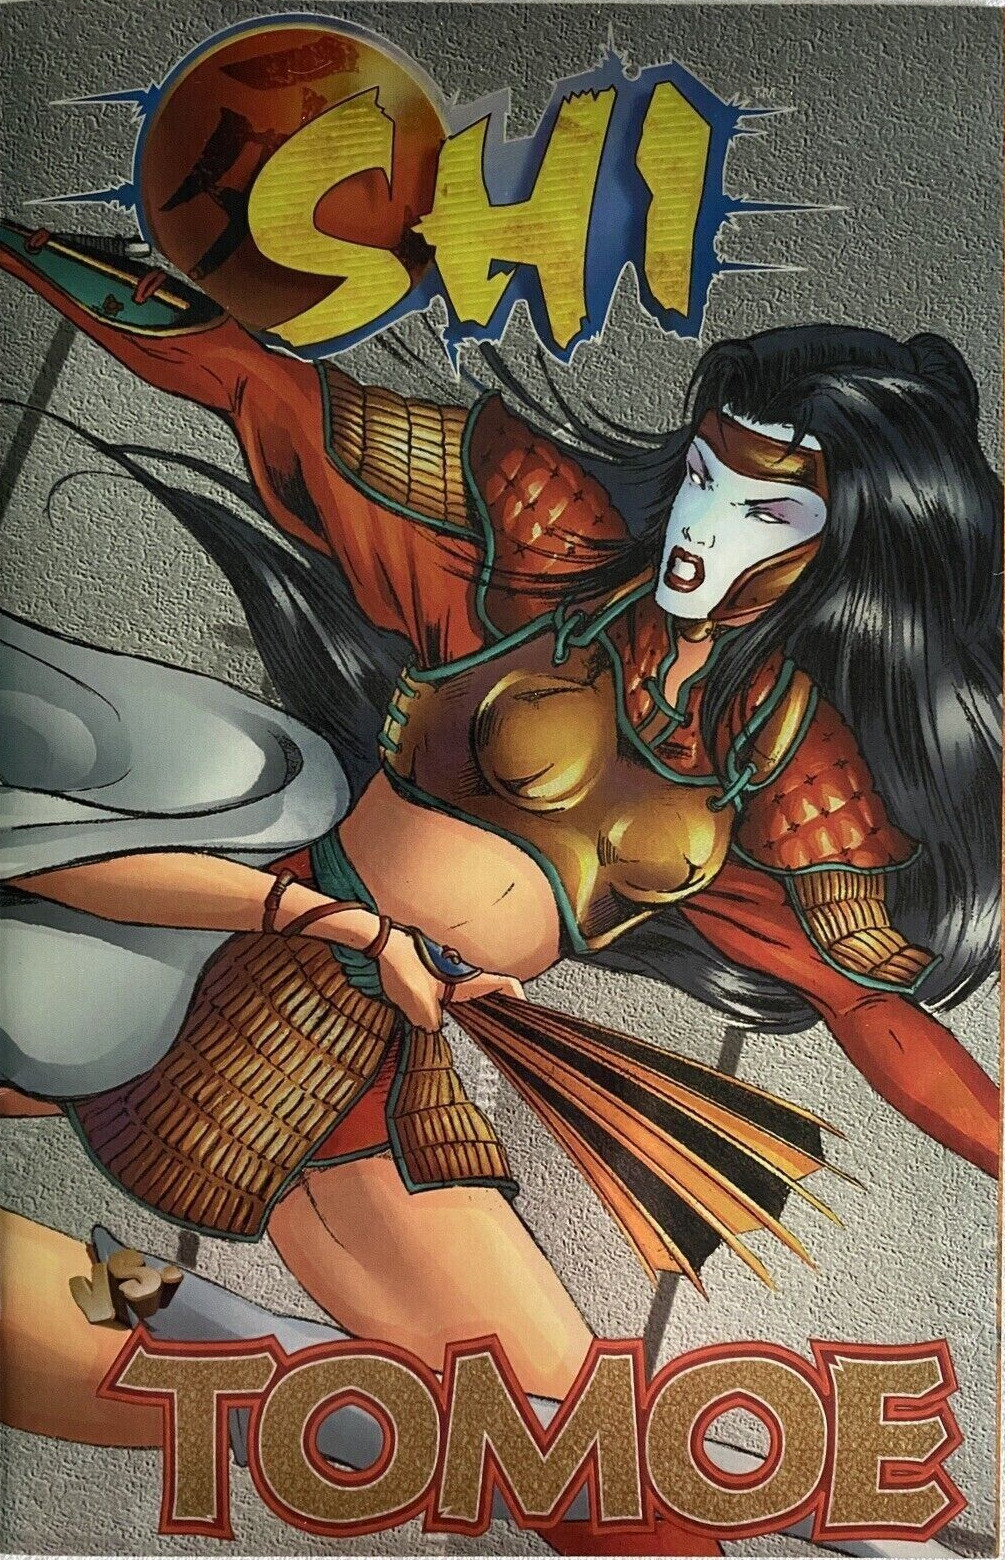 Shi vs. Tomoe #1 1996 Crusade Comics Chromium cover NM